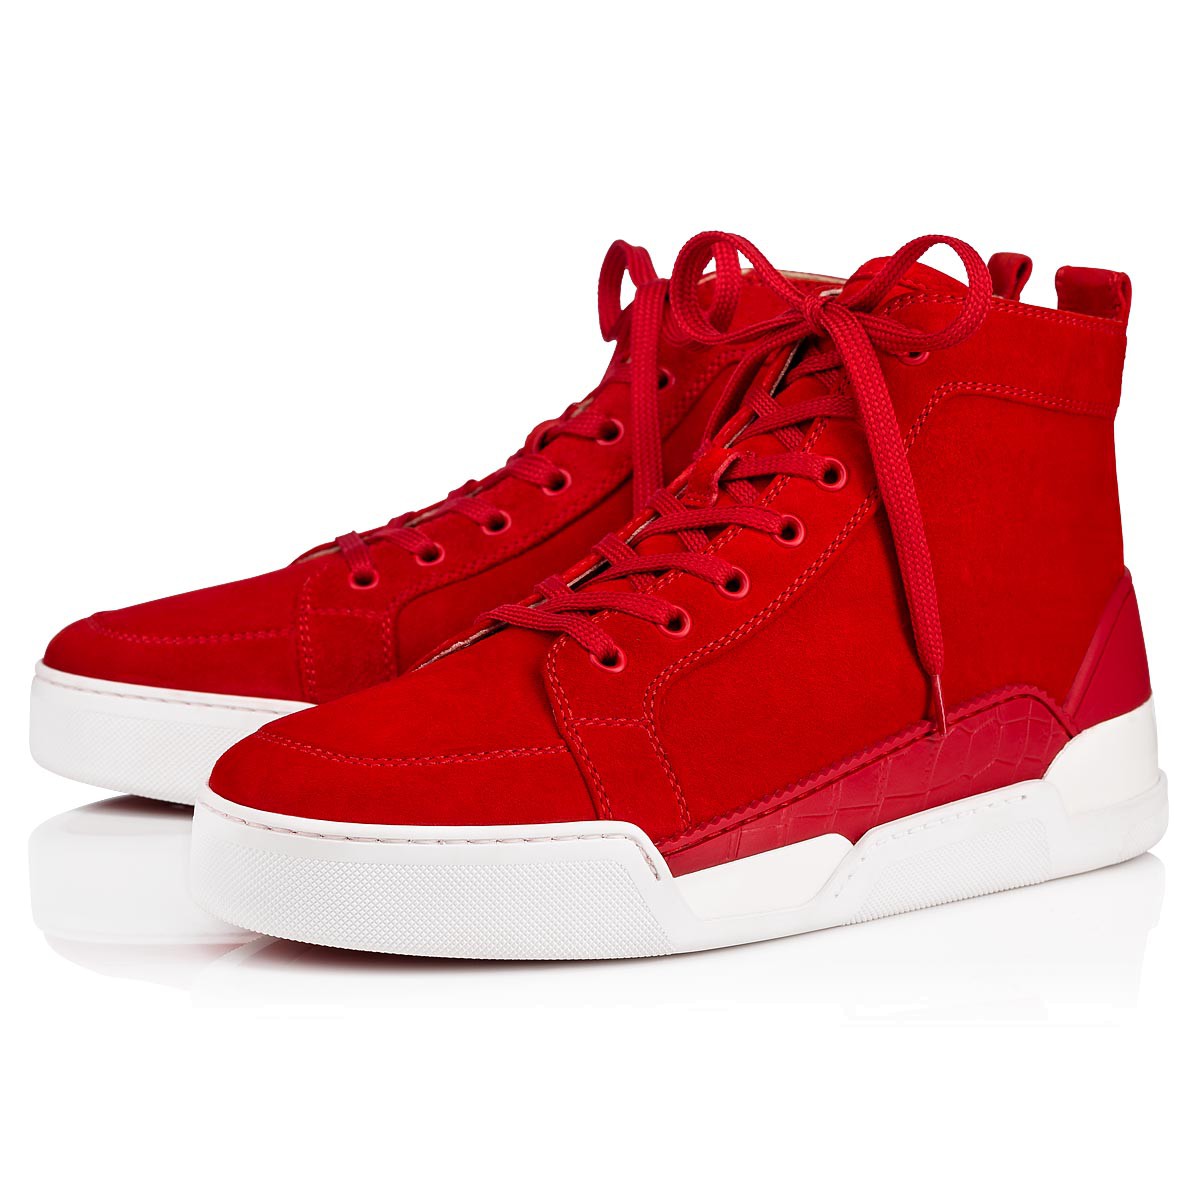 Fashion Sneaker Christian Louboutin Mens Shoes - Luxury Men's Shoes Red  Bottom - Aliexpress